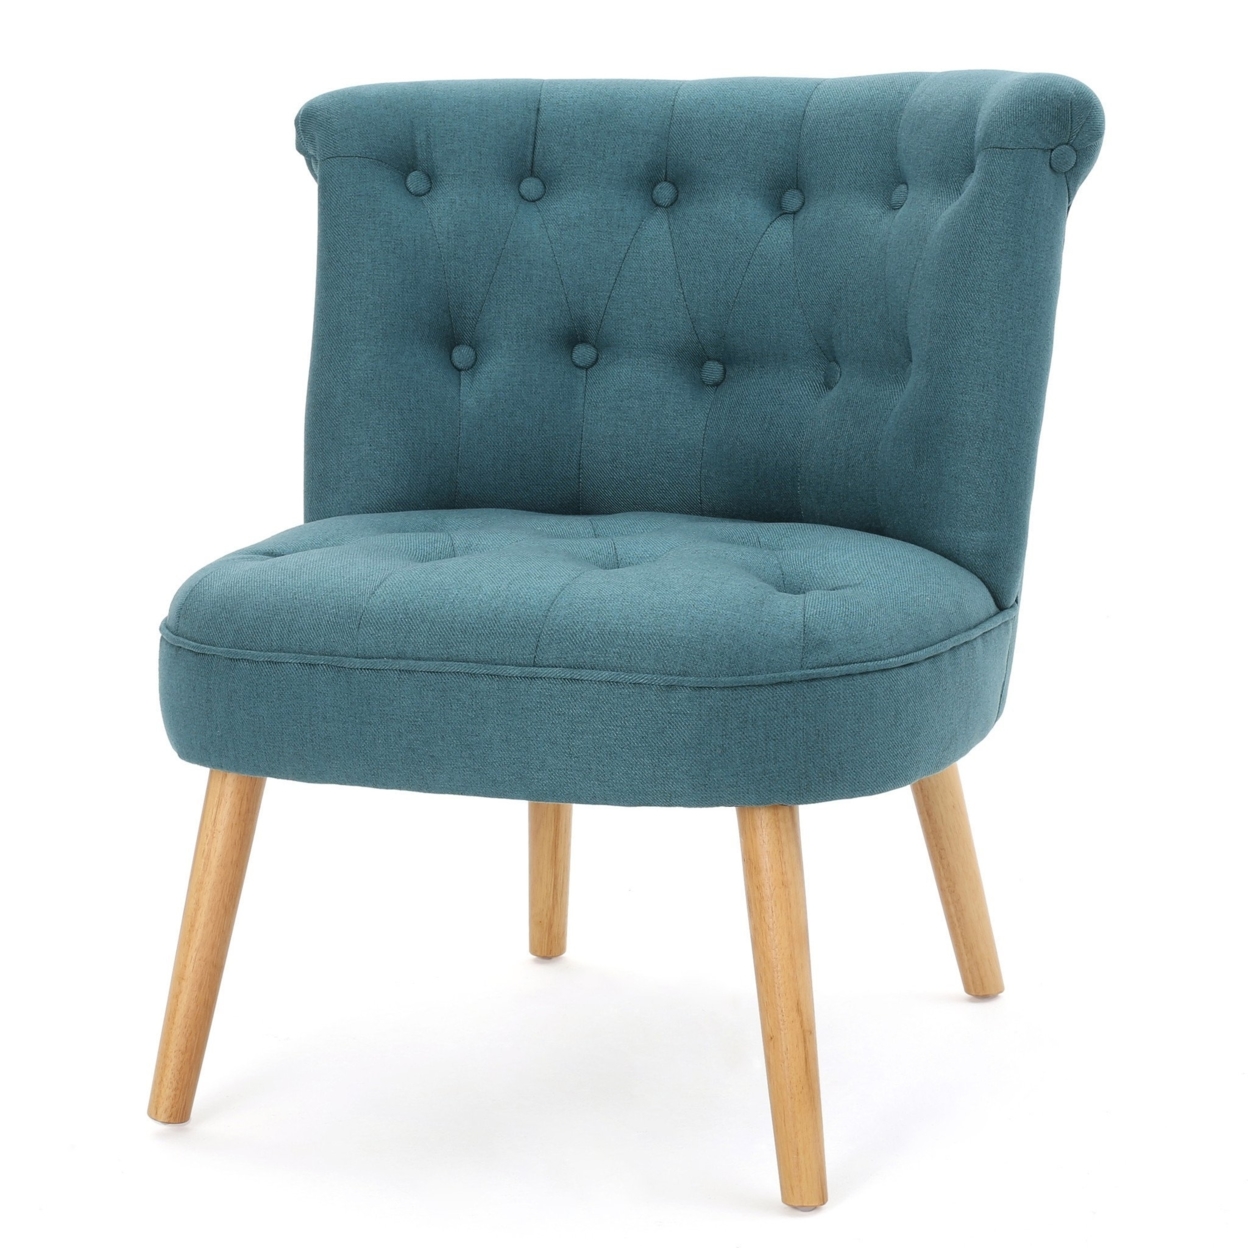 Donna Plush Modern Tufted Accent Chair - Light Blue